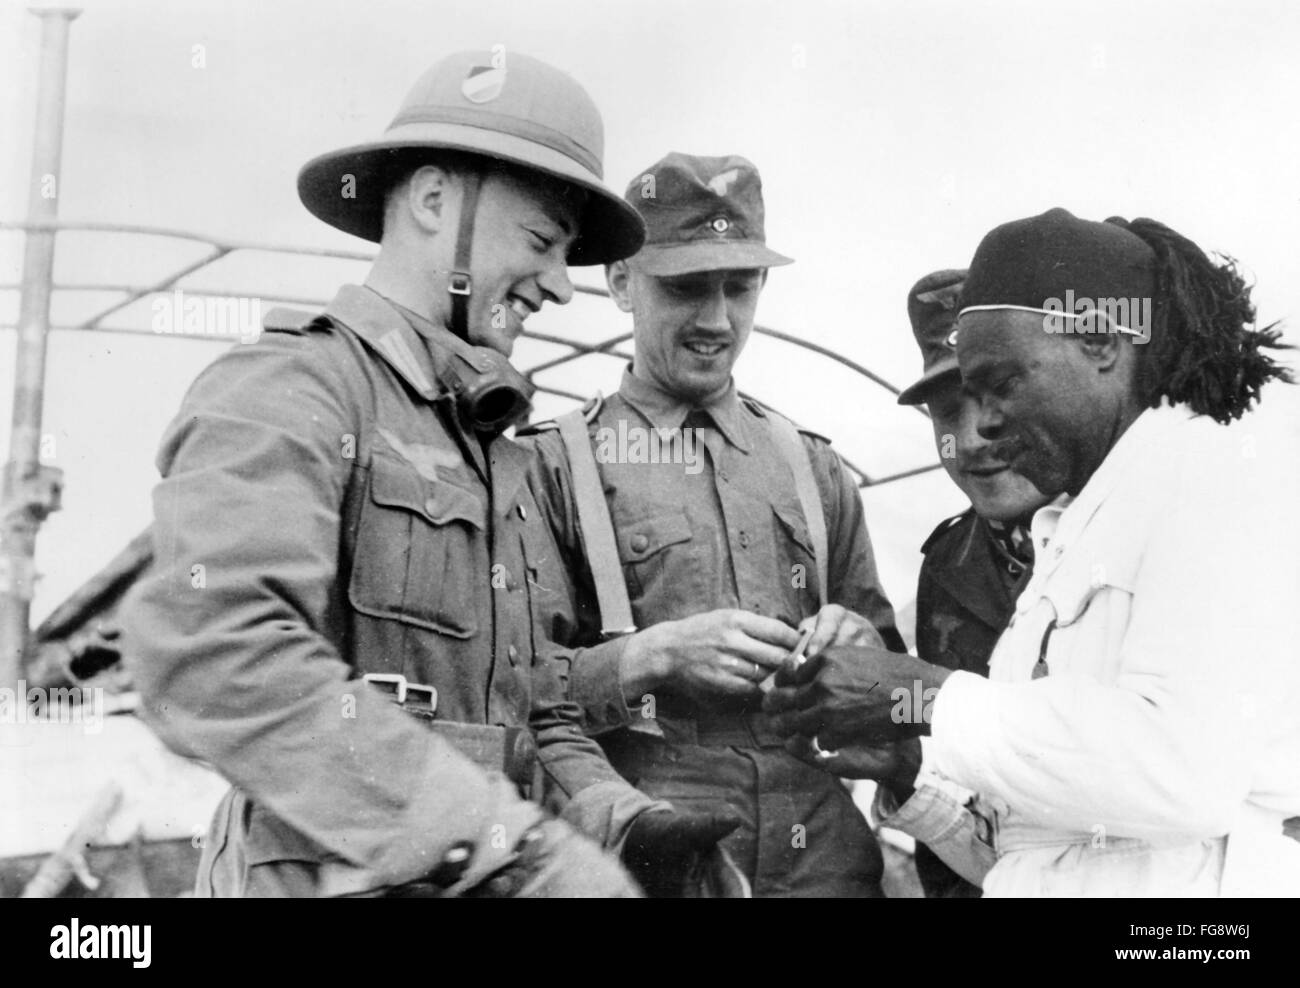 The Nazi propaganda image shows soldiers of the German Wehrmacht and locals in Libya. The photo was taken in March 1941. Fotoarchiv für Zeitgeschichte - NO WIRE SERVICE - Stock Photo